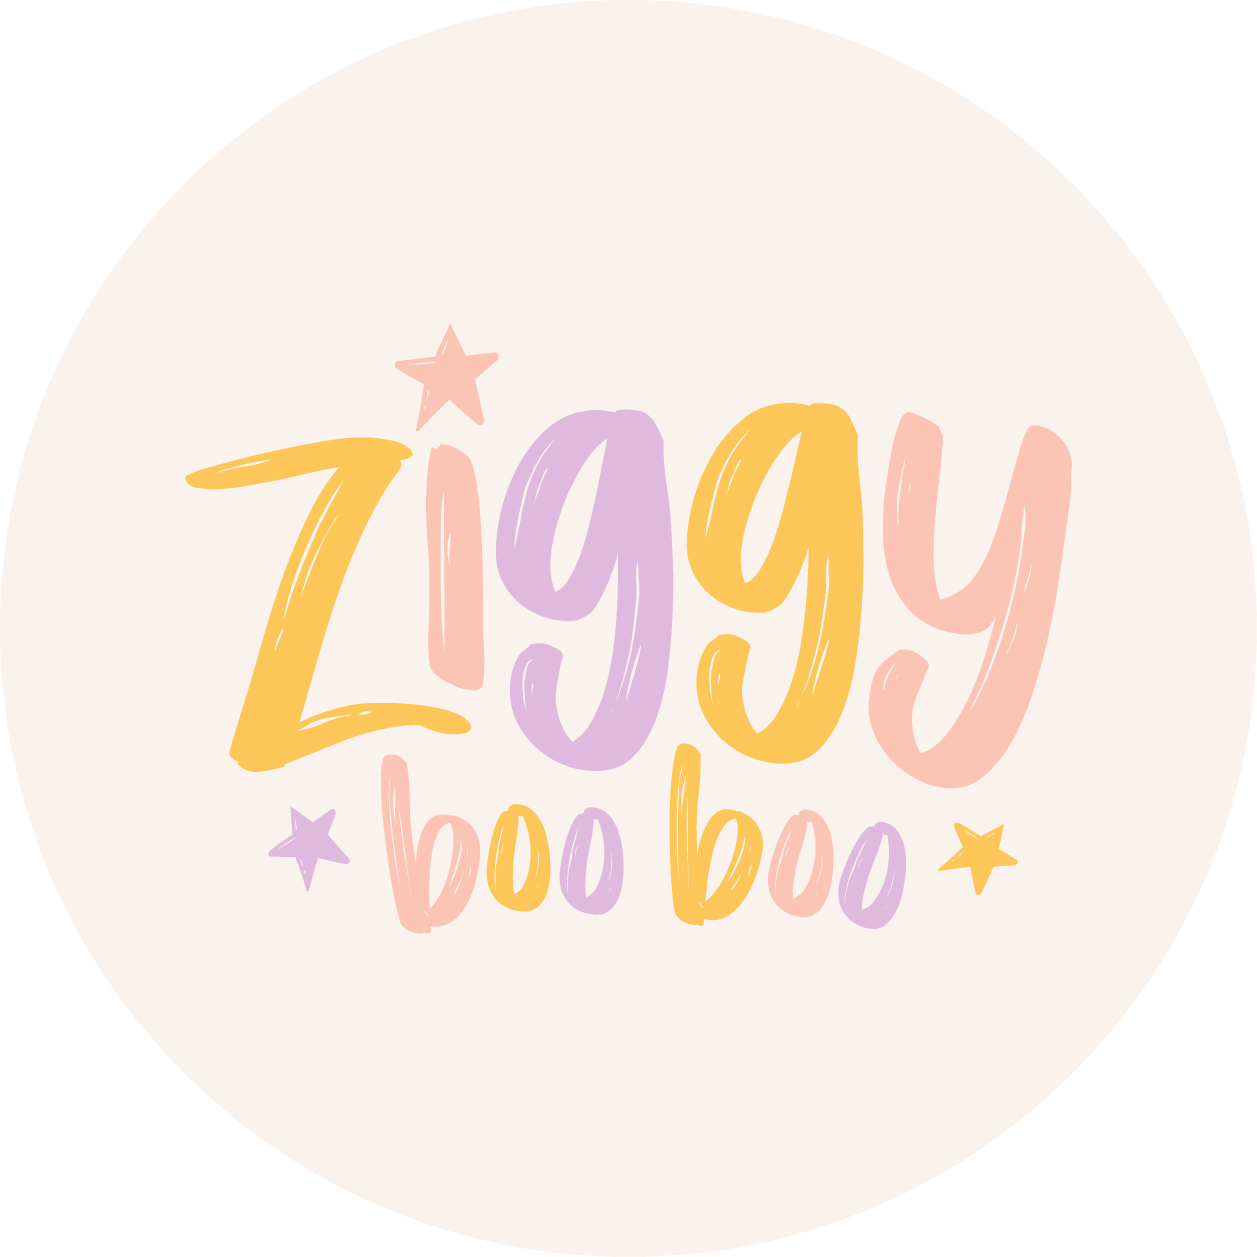 Ziggy boo boo logo